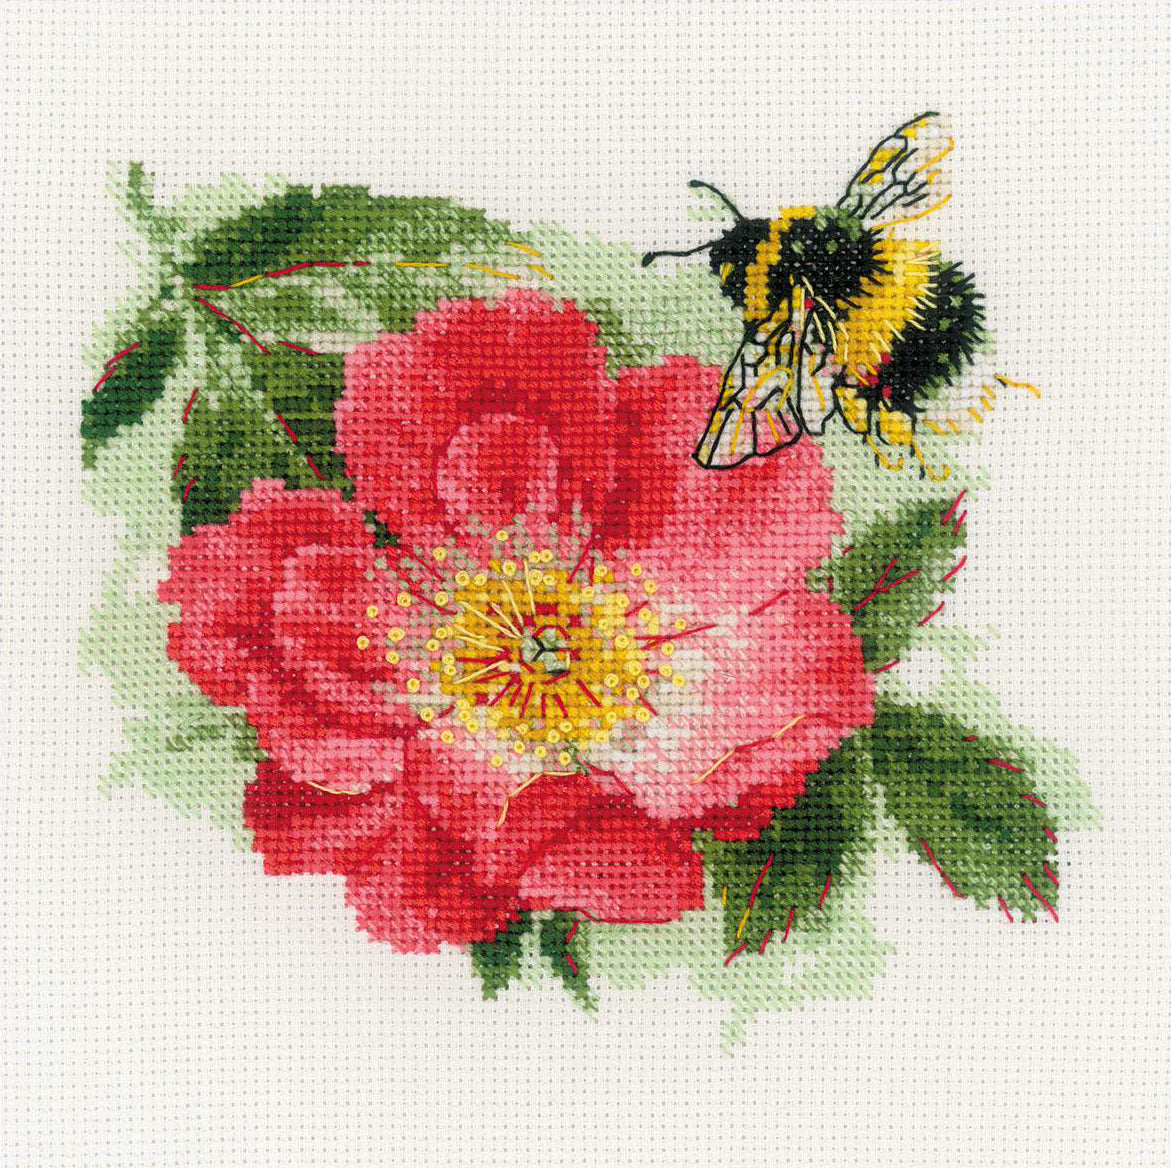 Cross Stitch Kit - "Bumblebee on the Flower" - Riolis 2210